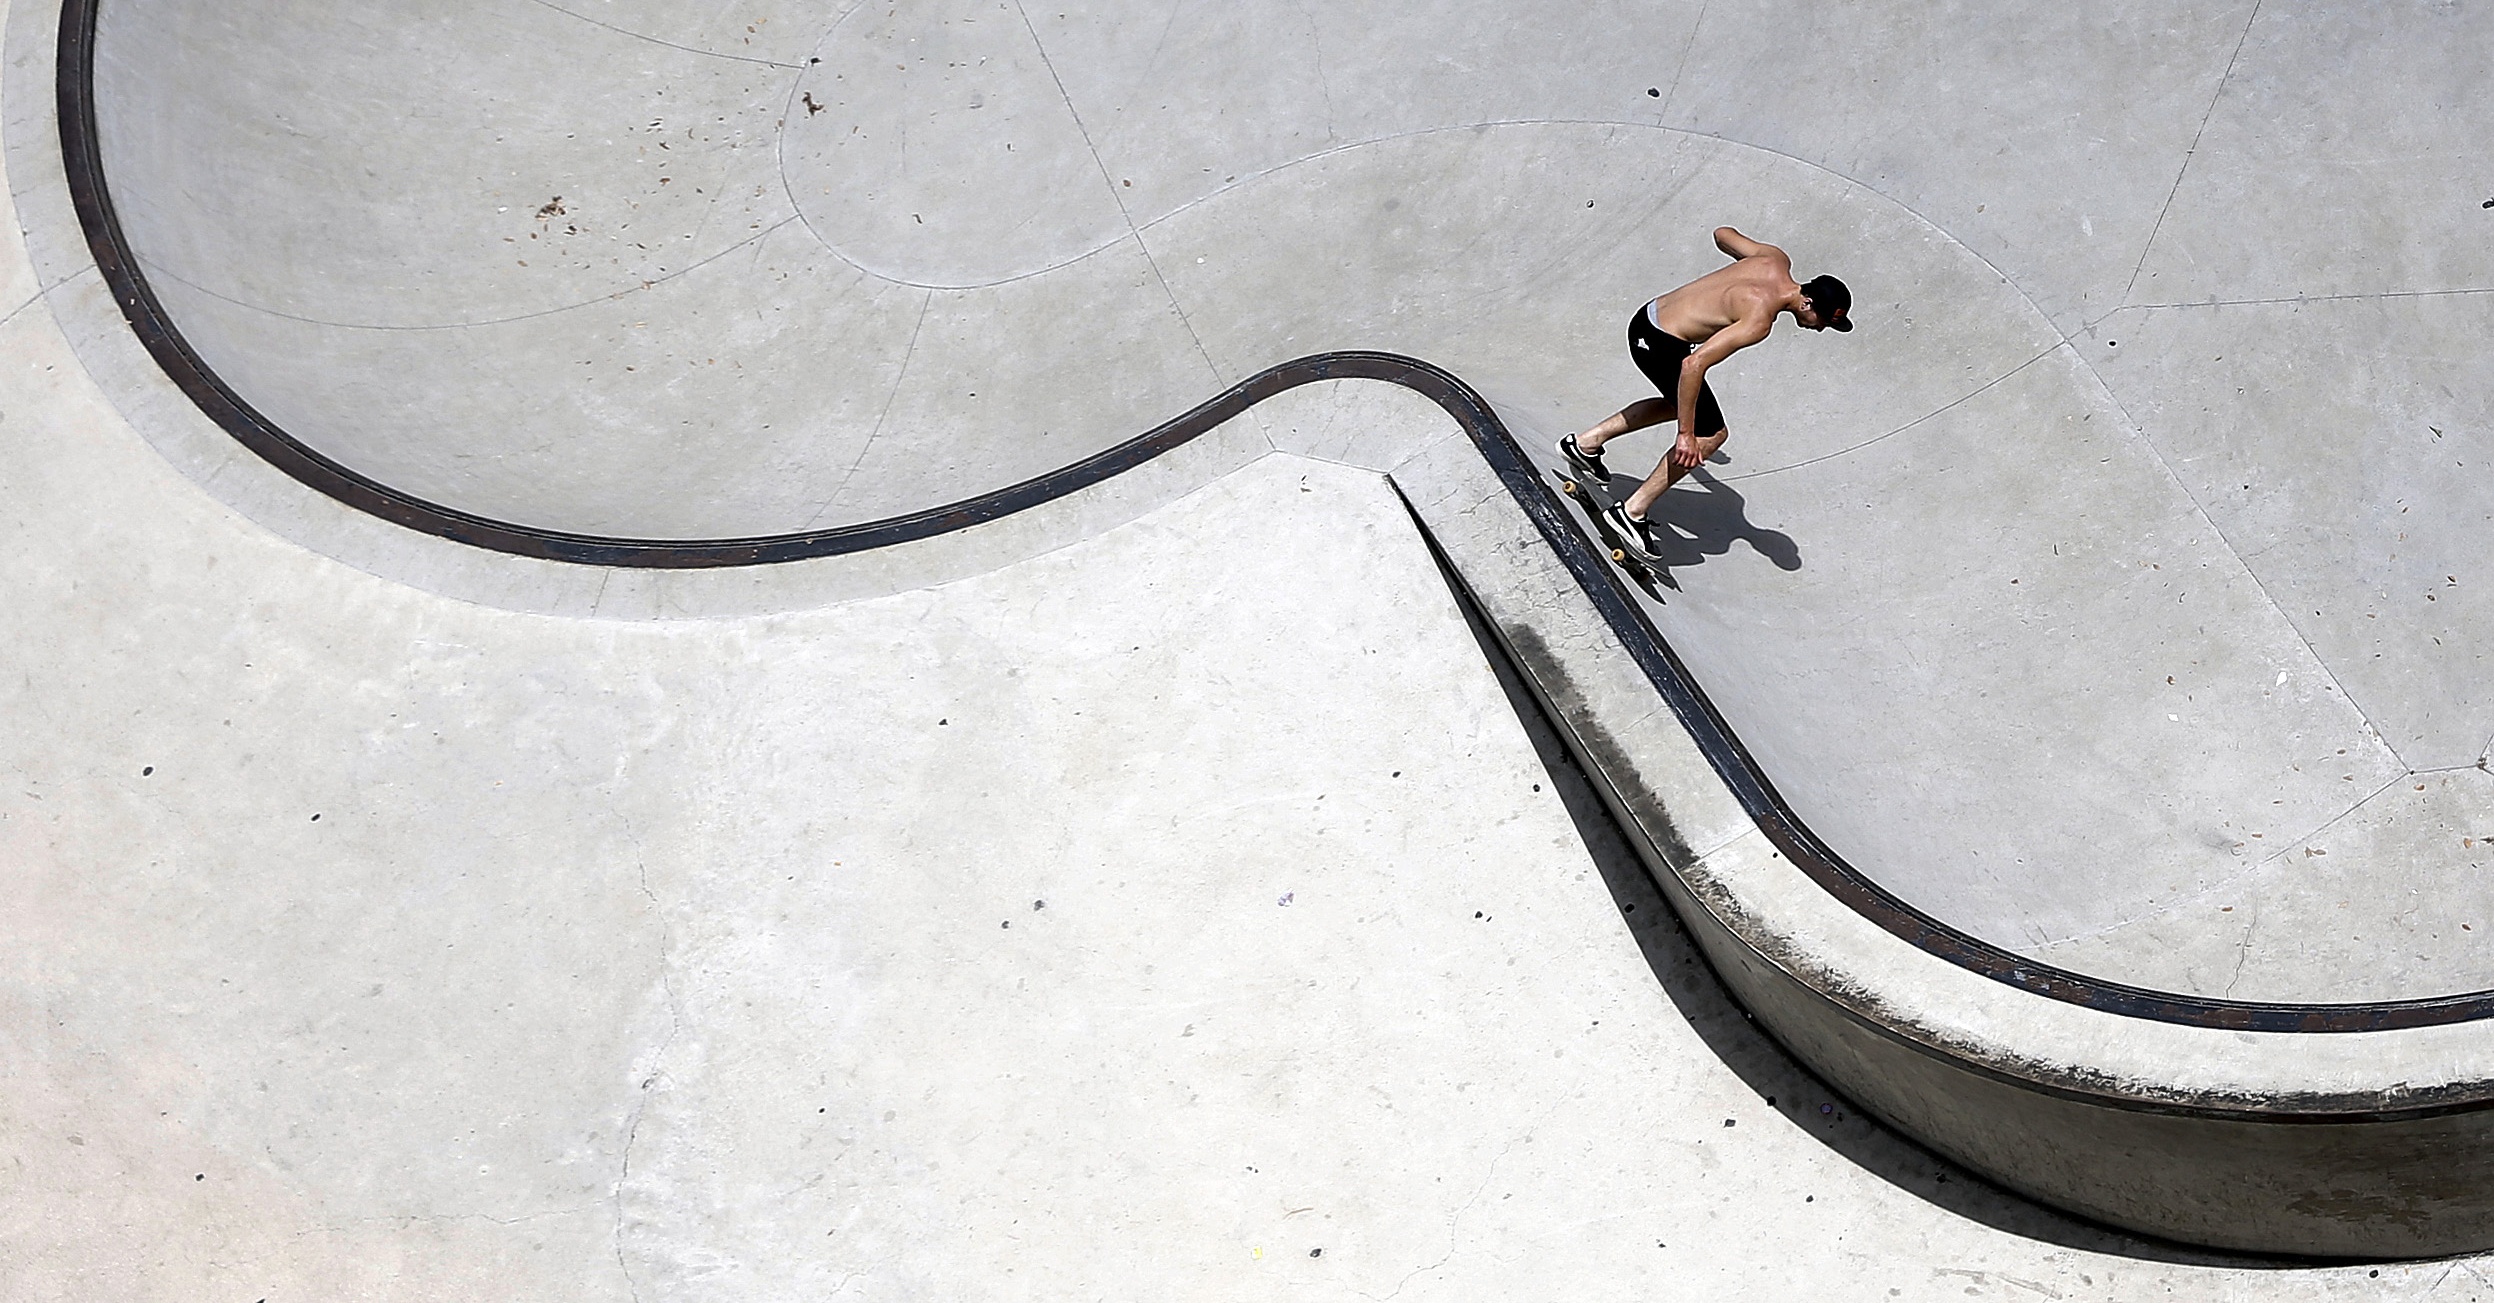 A skateboarder balances his board along a wall in a skateboard park, Thursday, June 25, 2015, in Austin, Texas. (AP Photo/Eric Gay)